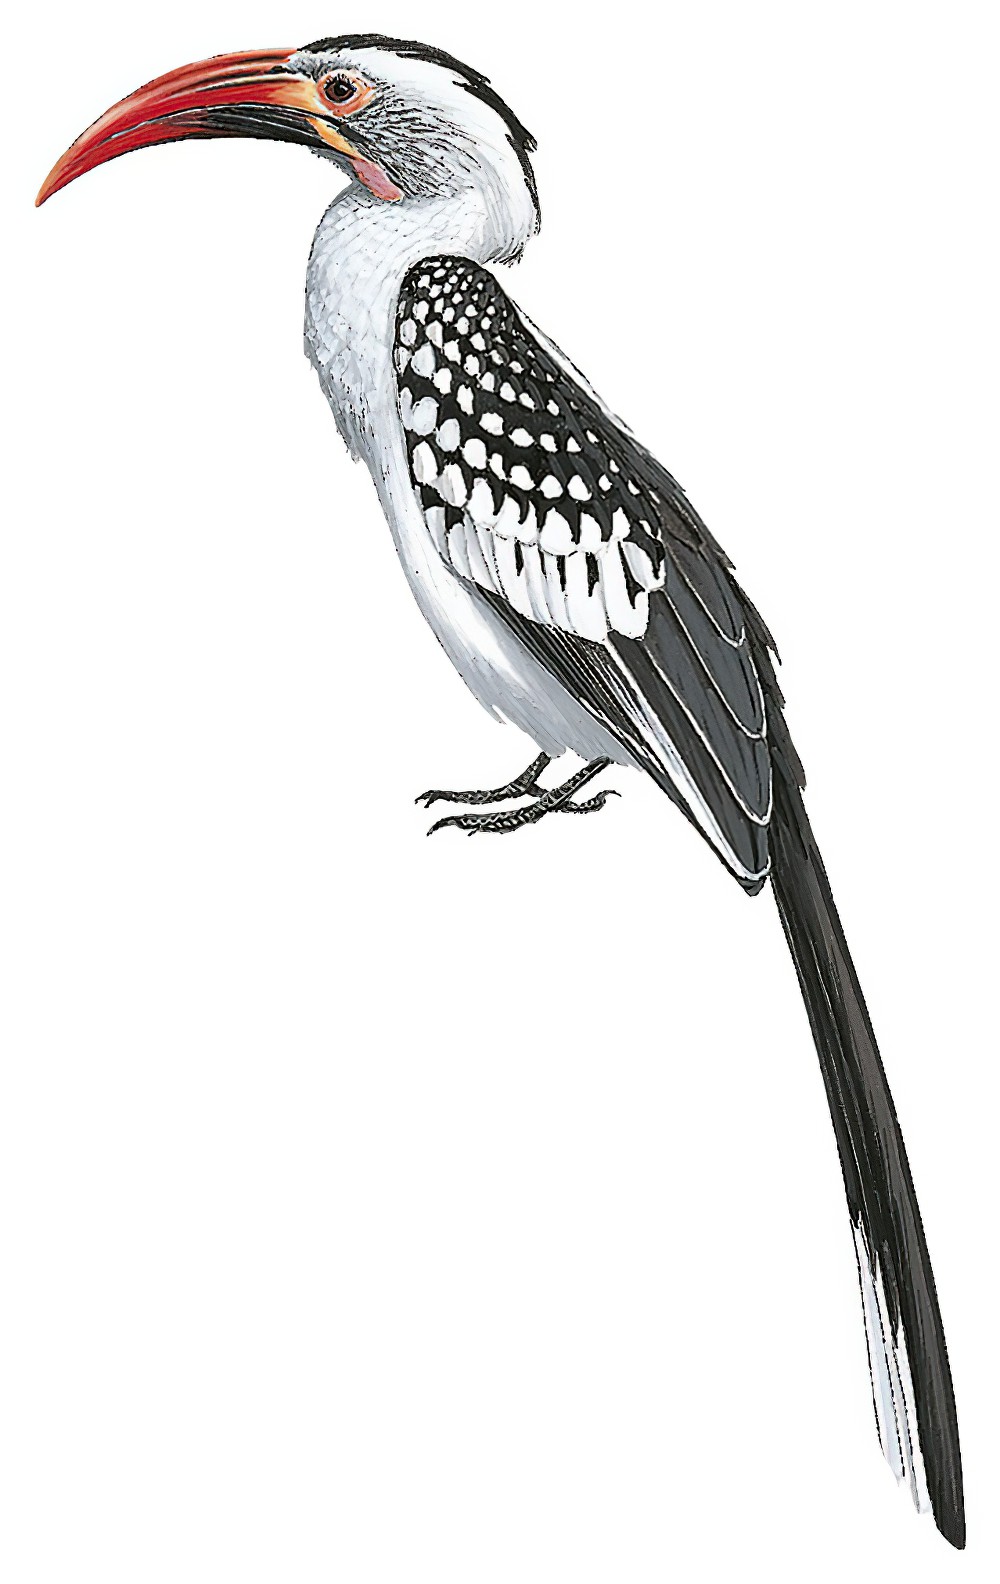 Northern Red-billed Hornbill / Tockus erythrorhynchus